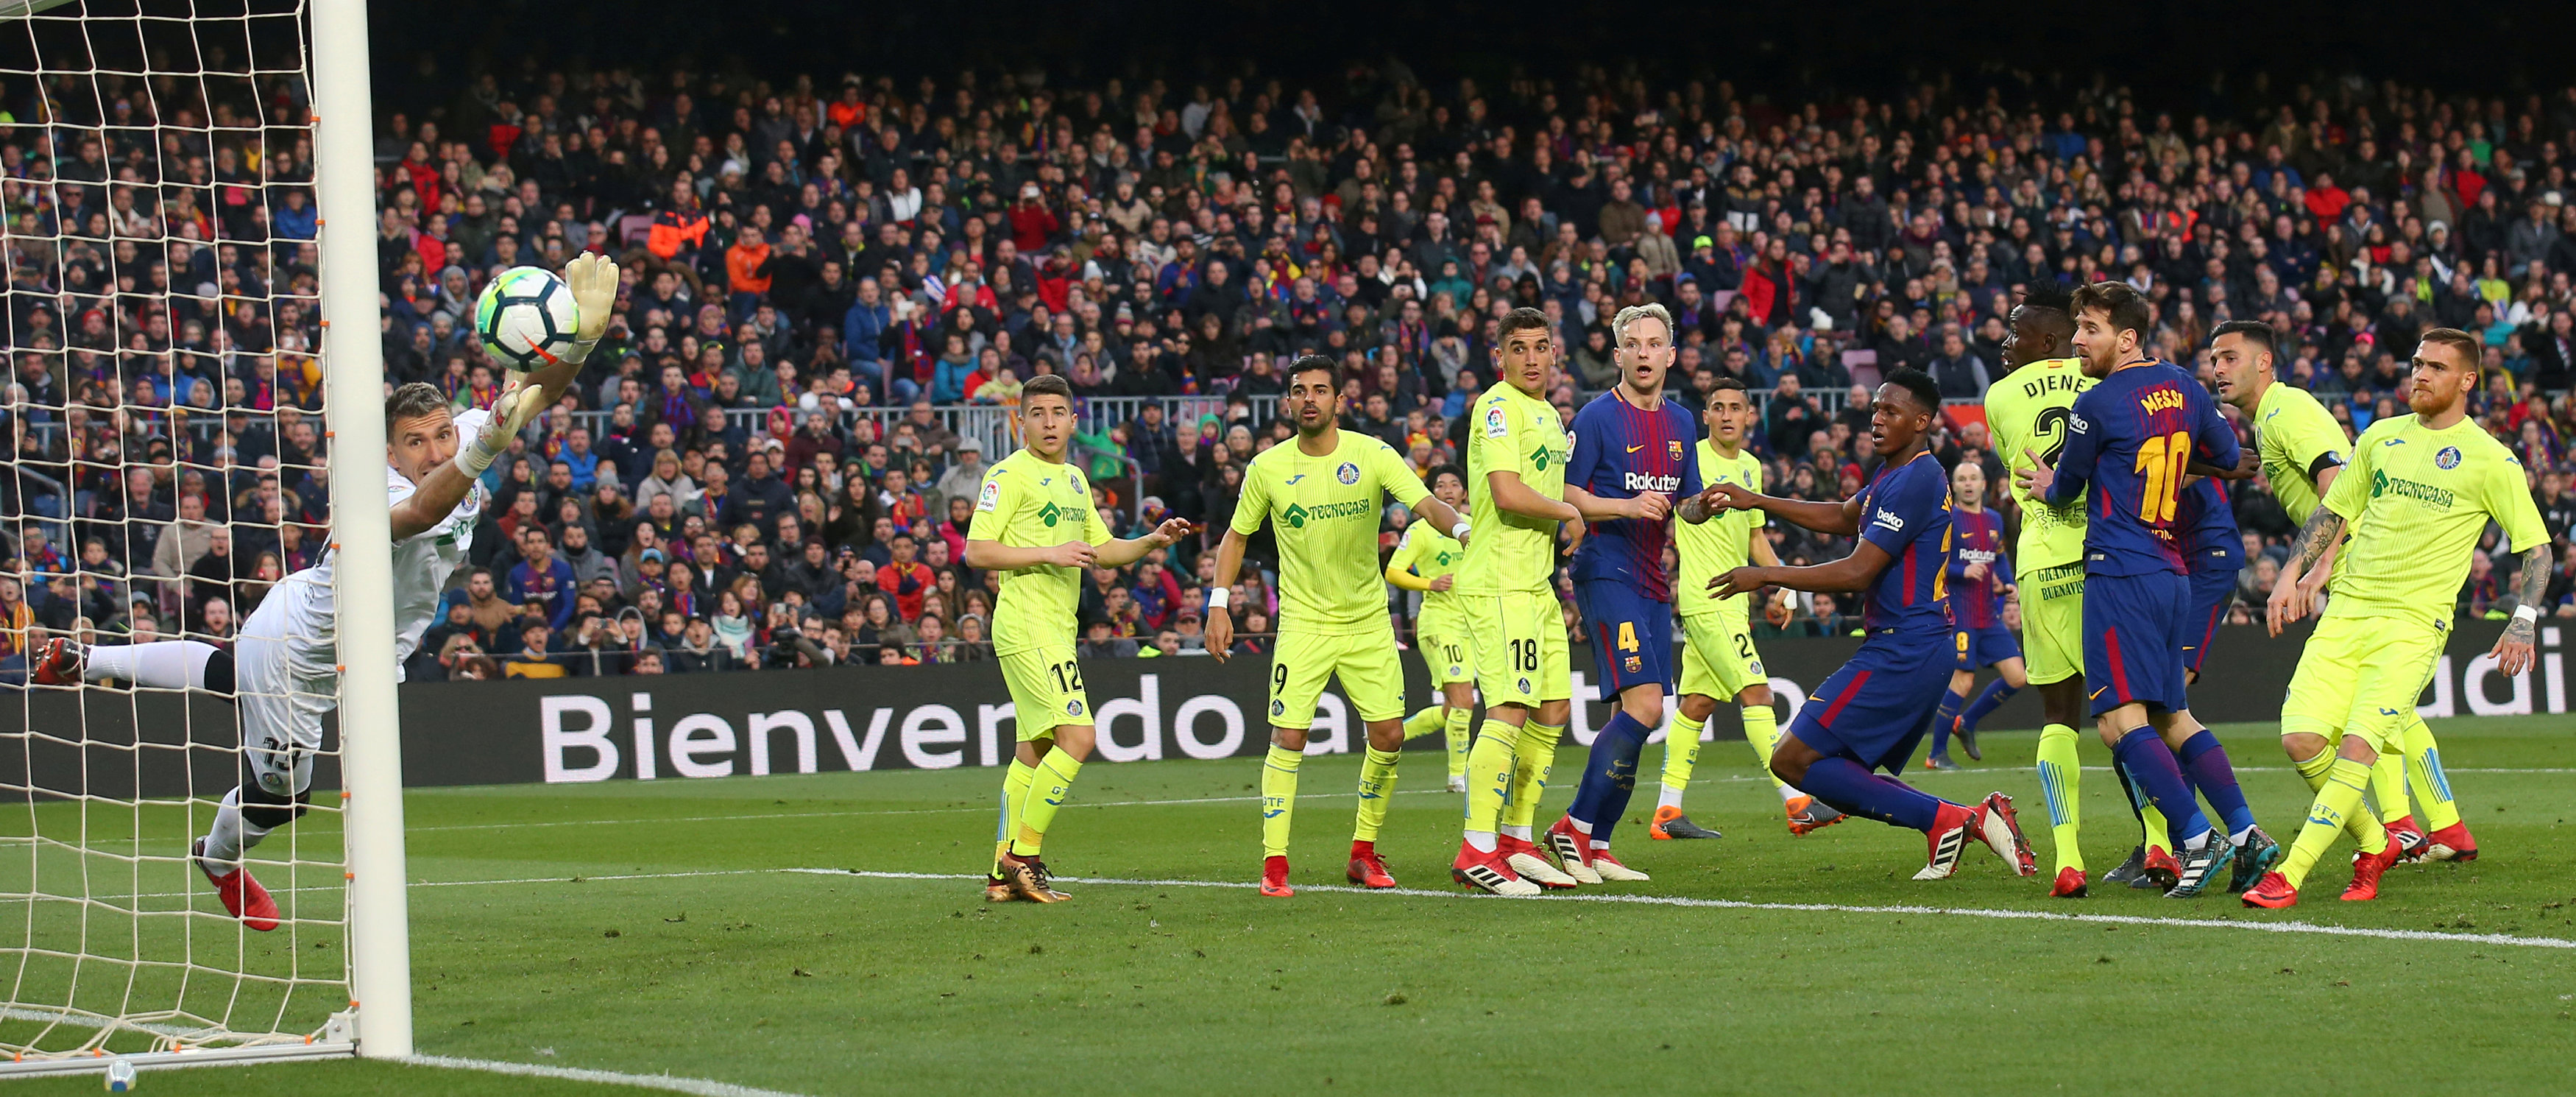 Football: Barcelona stumble in dull draw with Getafe